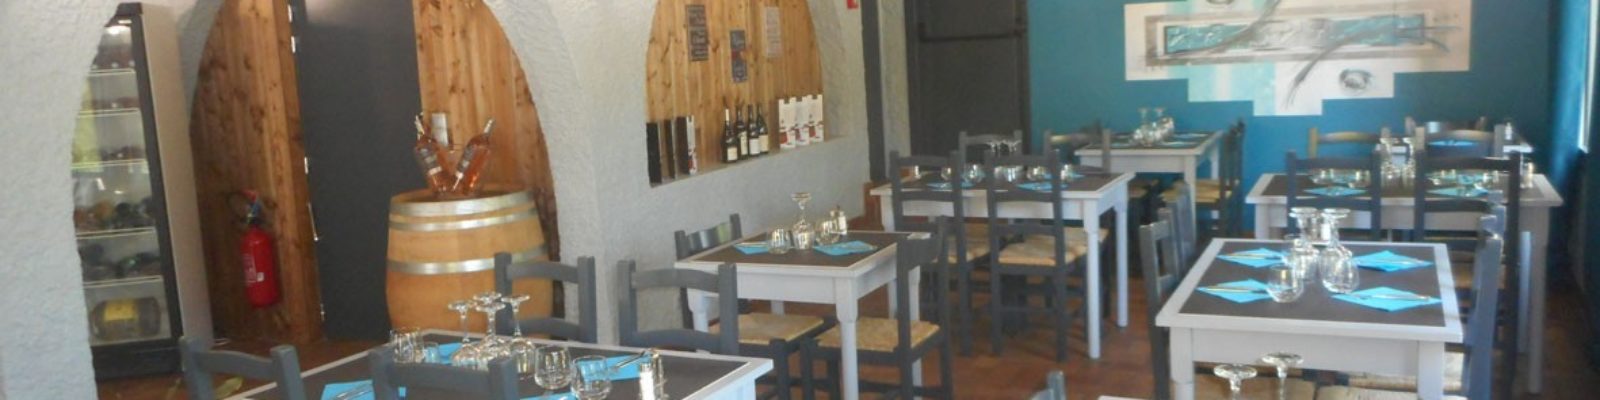 Restaurant crêperie à Vogüé en Ardèche